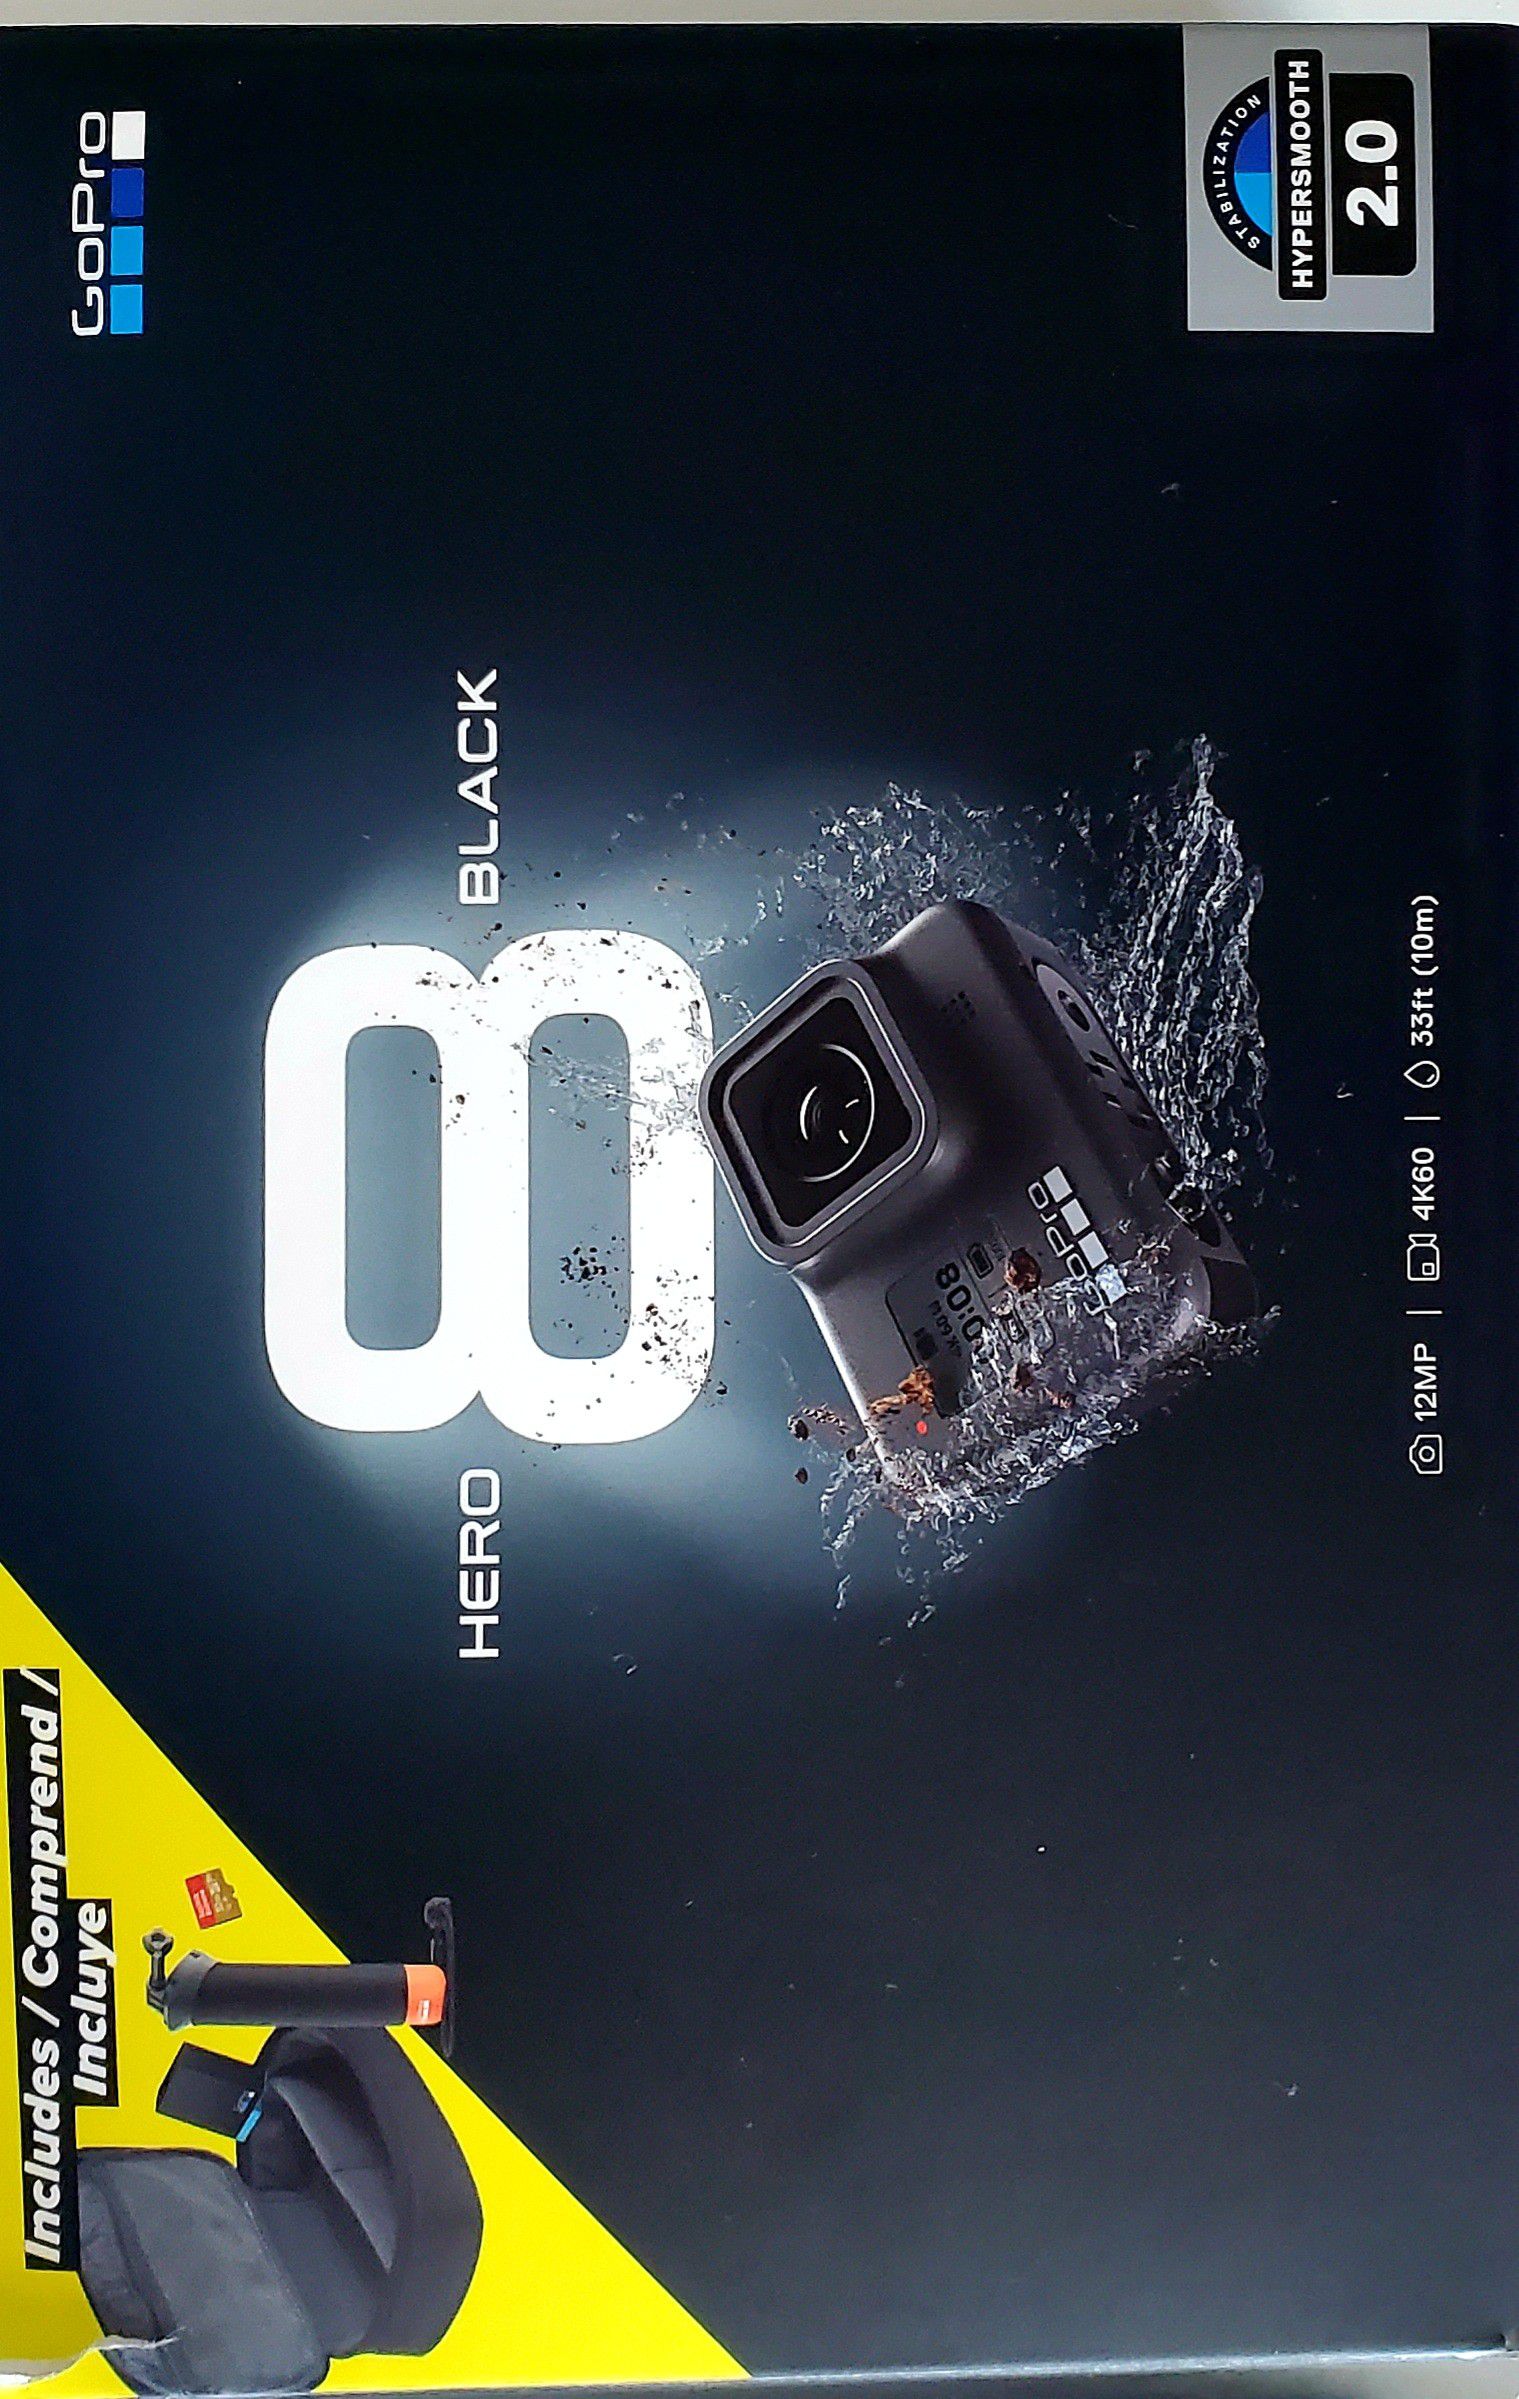 Gopro 8 black great camera open box.